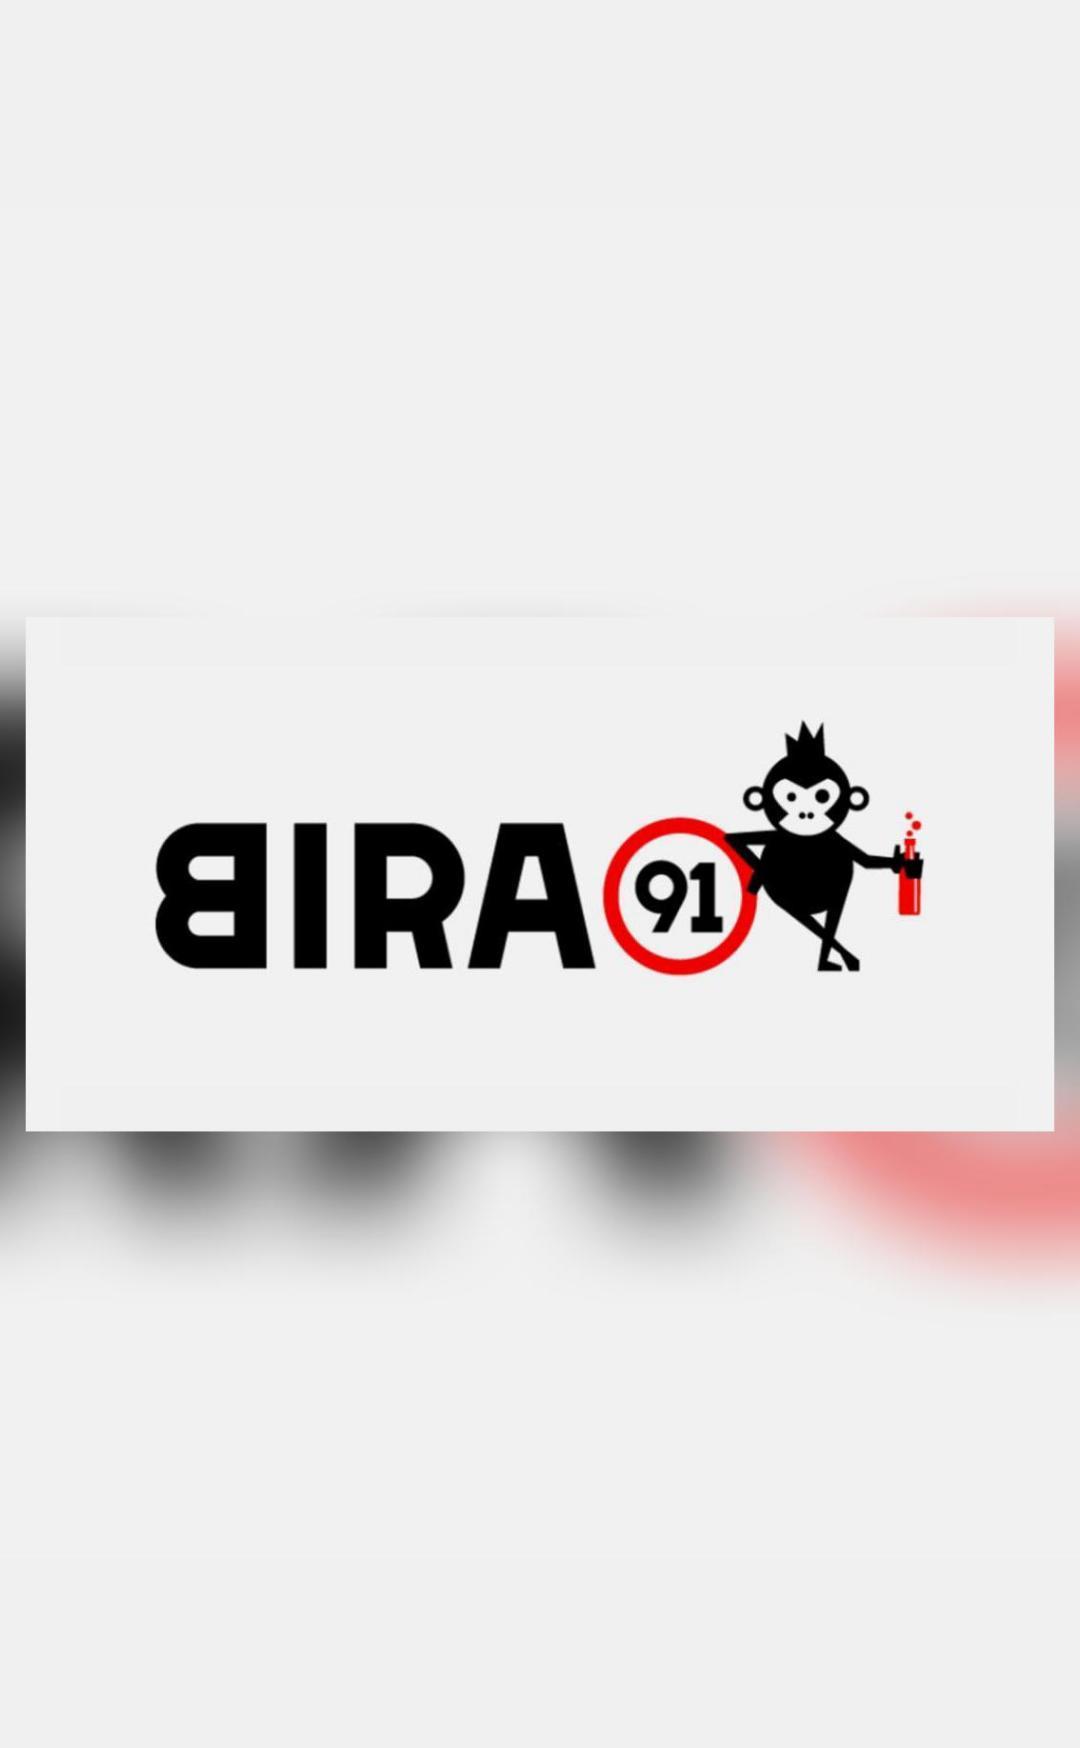 Bira wobbles a bit, losses rise in FY19 - The Economic Times